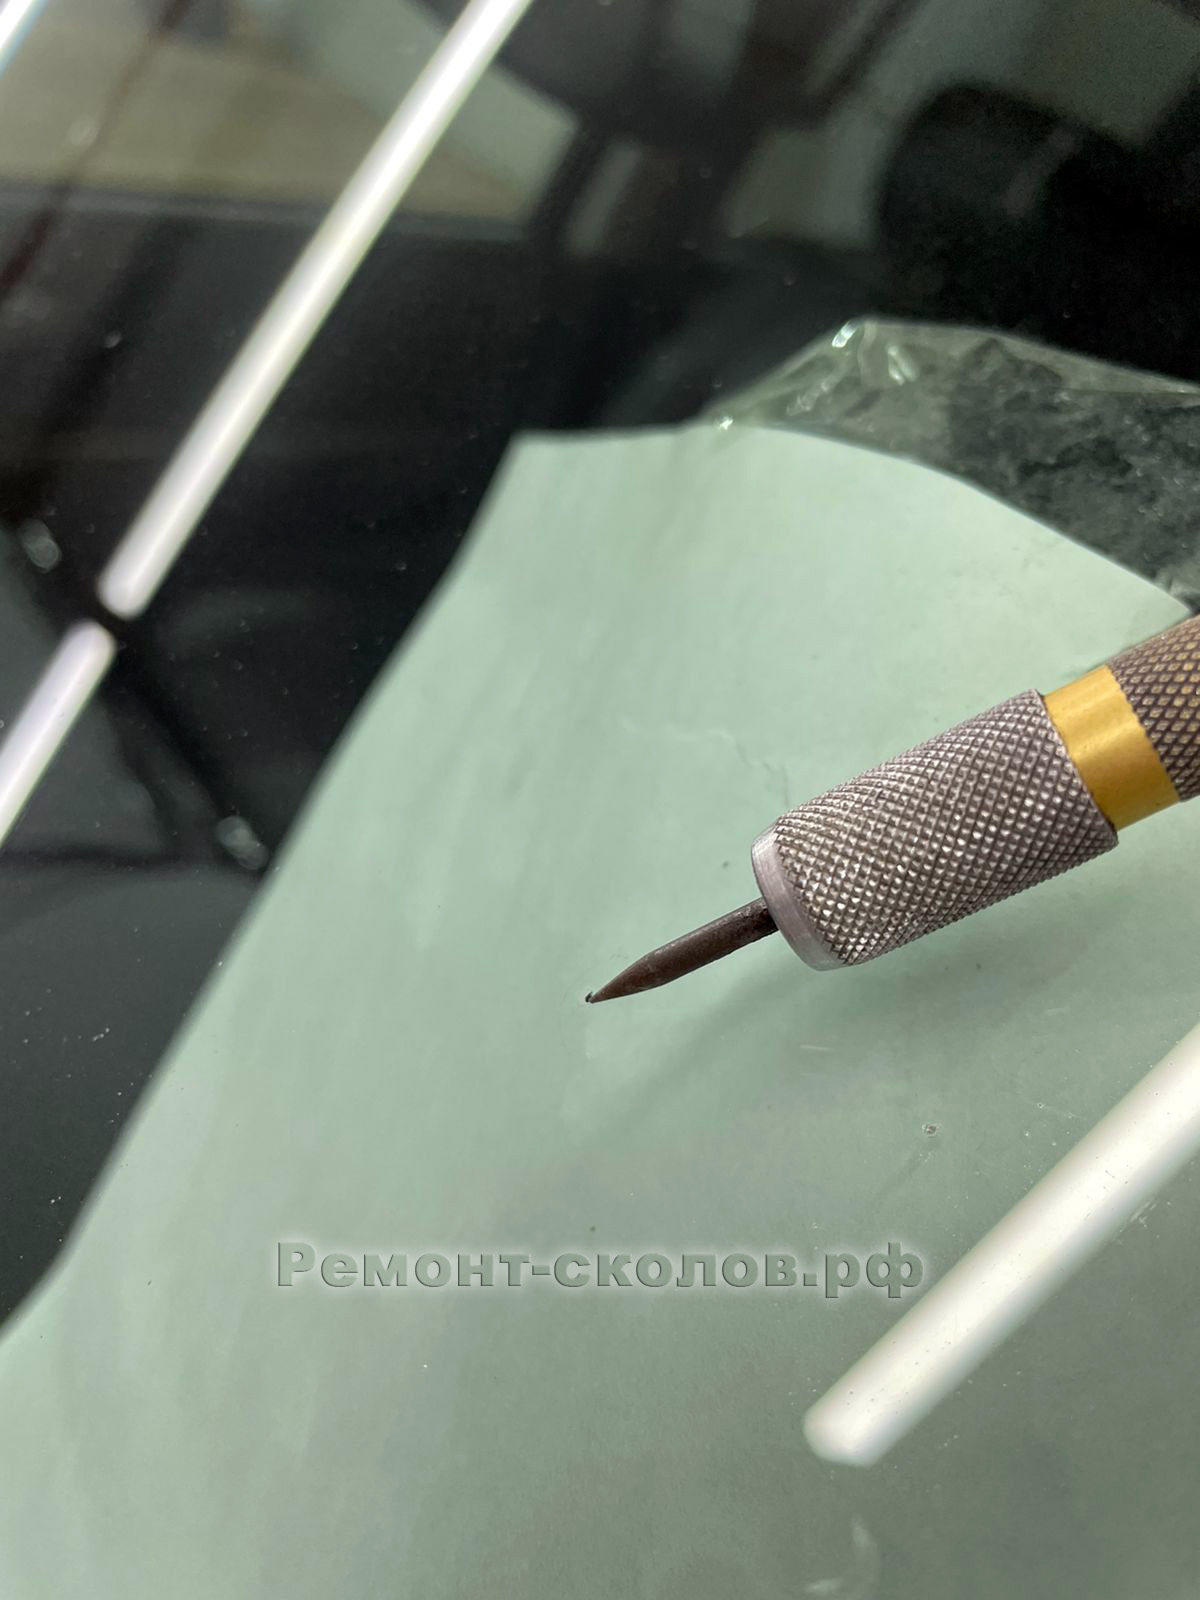 Toyota Tundra ремонт скола лобового стекла в ЮЗАО